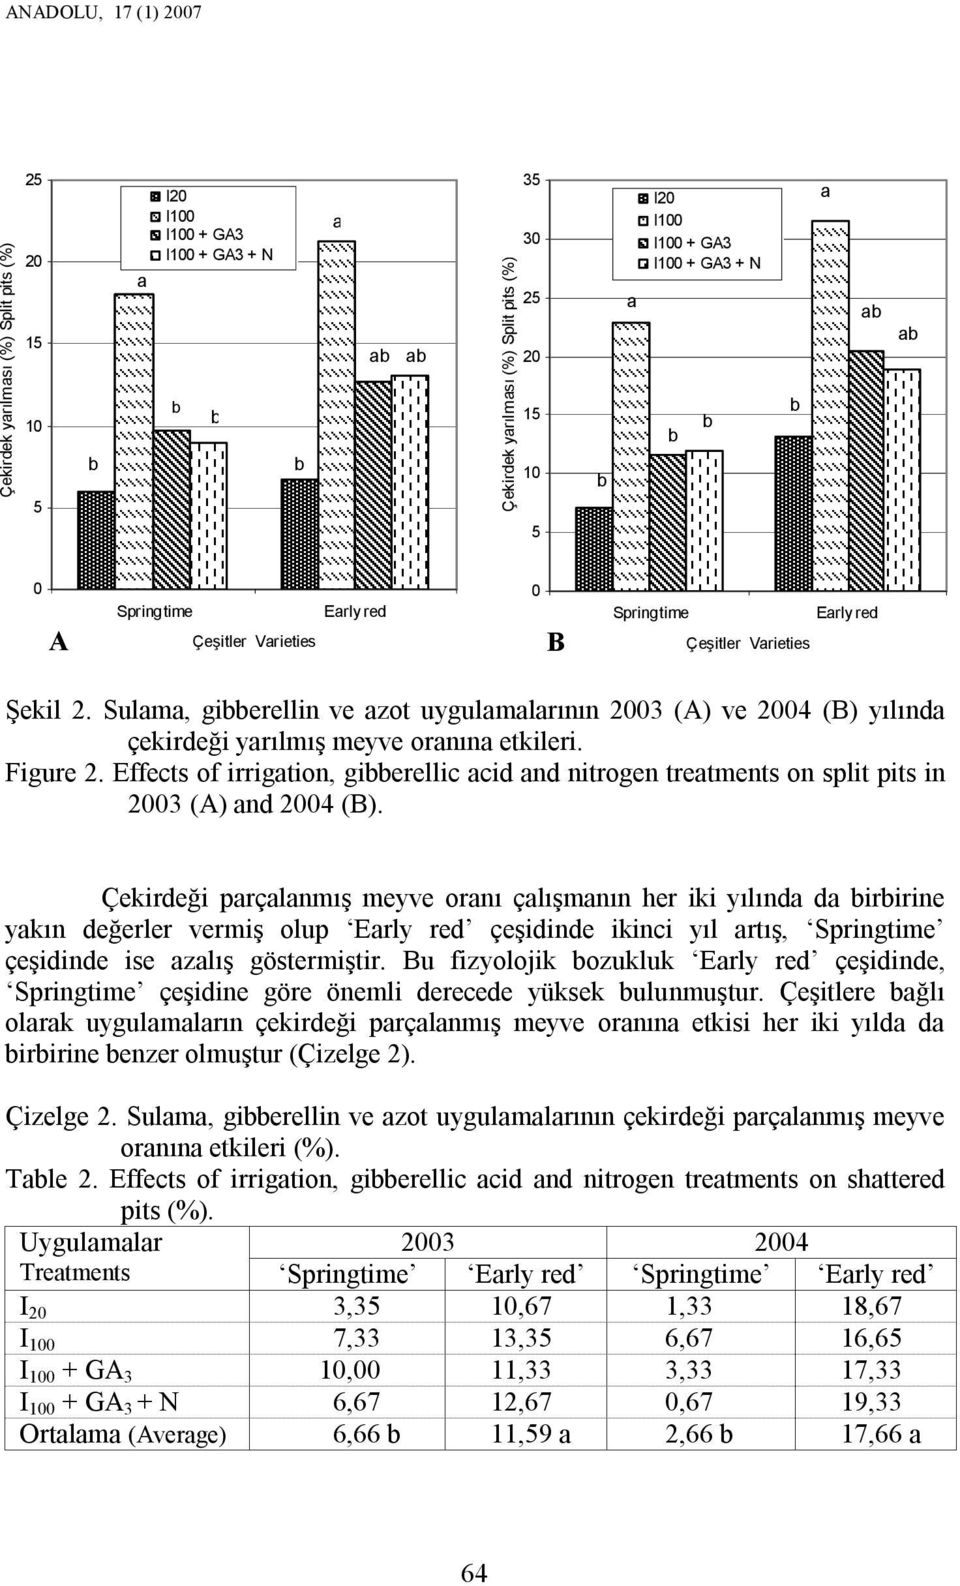 Figure 2. Effects of irrigtion, gierellic cid nd nitrogen tretments on split pits in 2003 (A) nd 2004 (B).